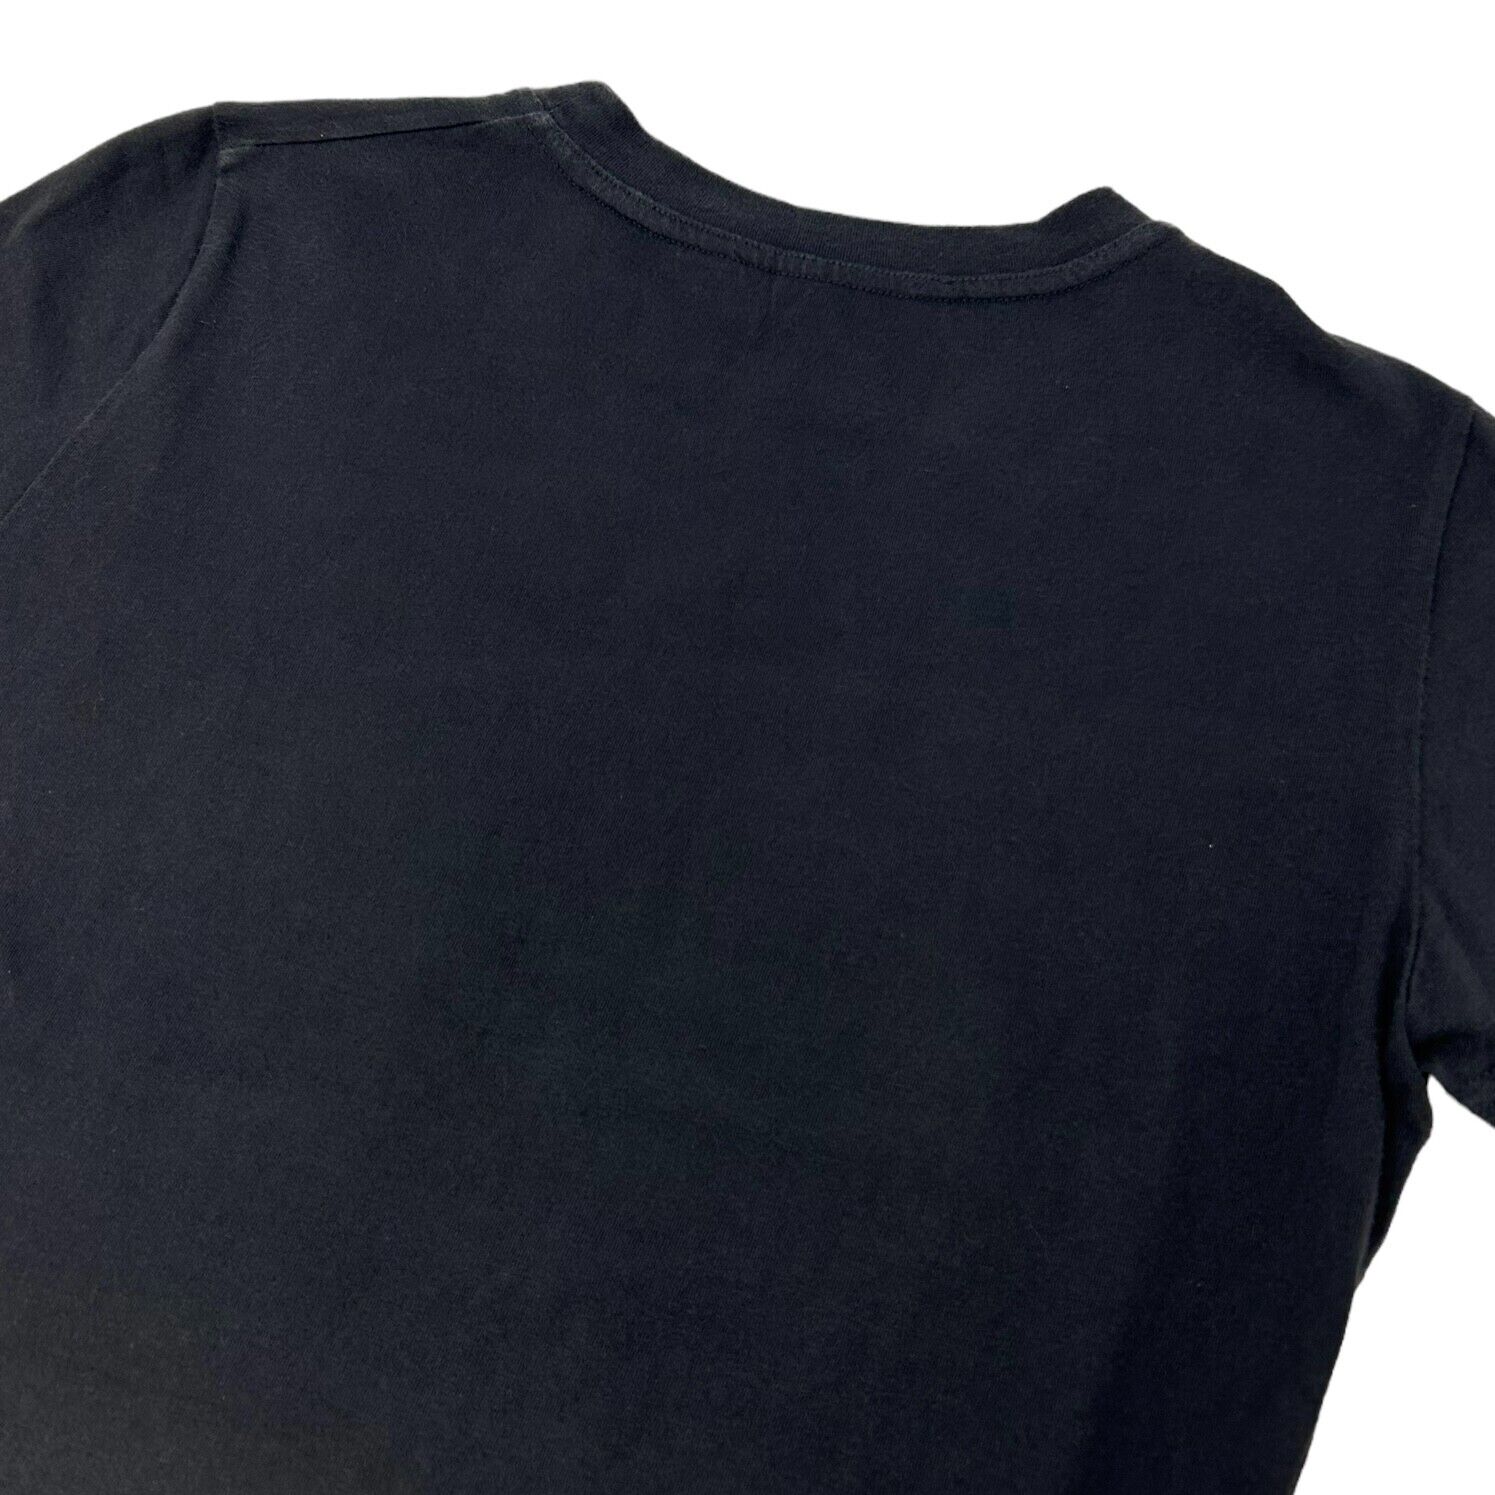 Christian Dior Vintage Logo T-shirts #38 Black Rainbow Cotton Star Rank AB